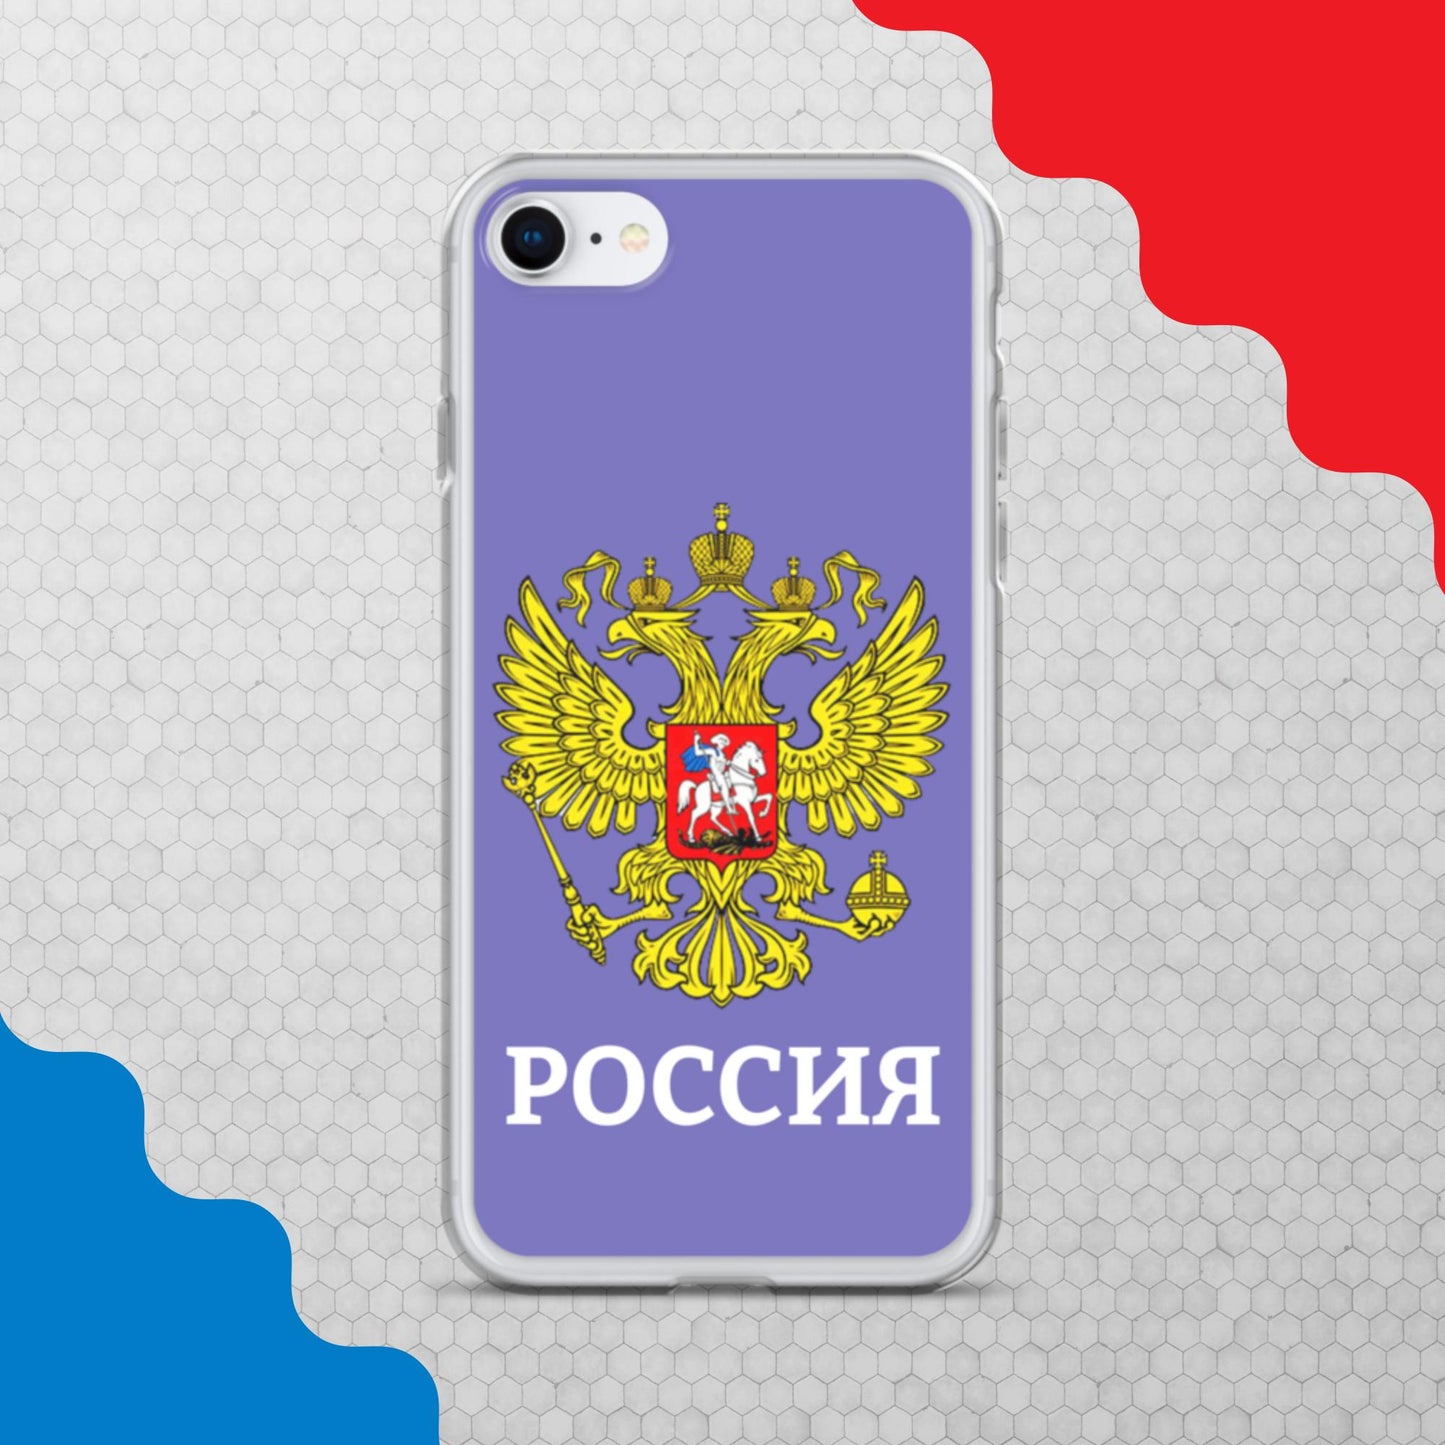 iPhone-Hülle mit Russland-Wappen in violett (alle Modelle)